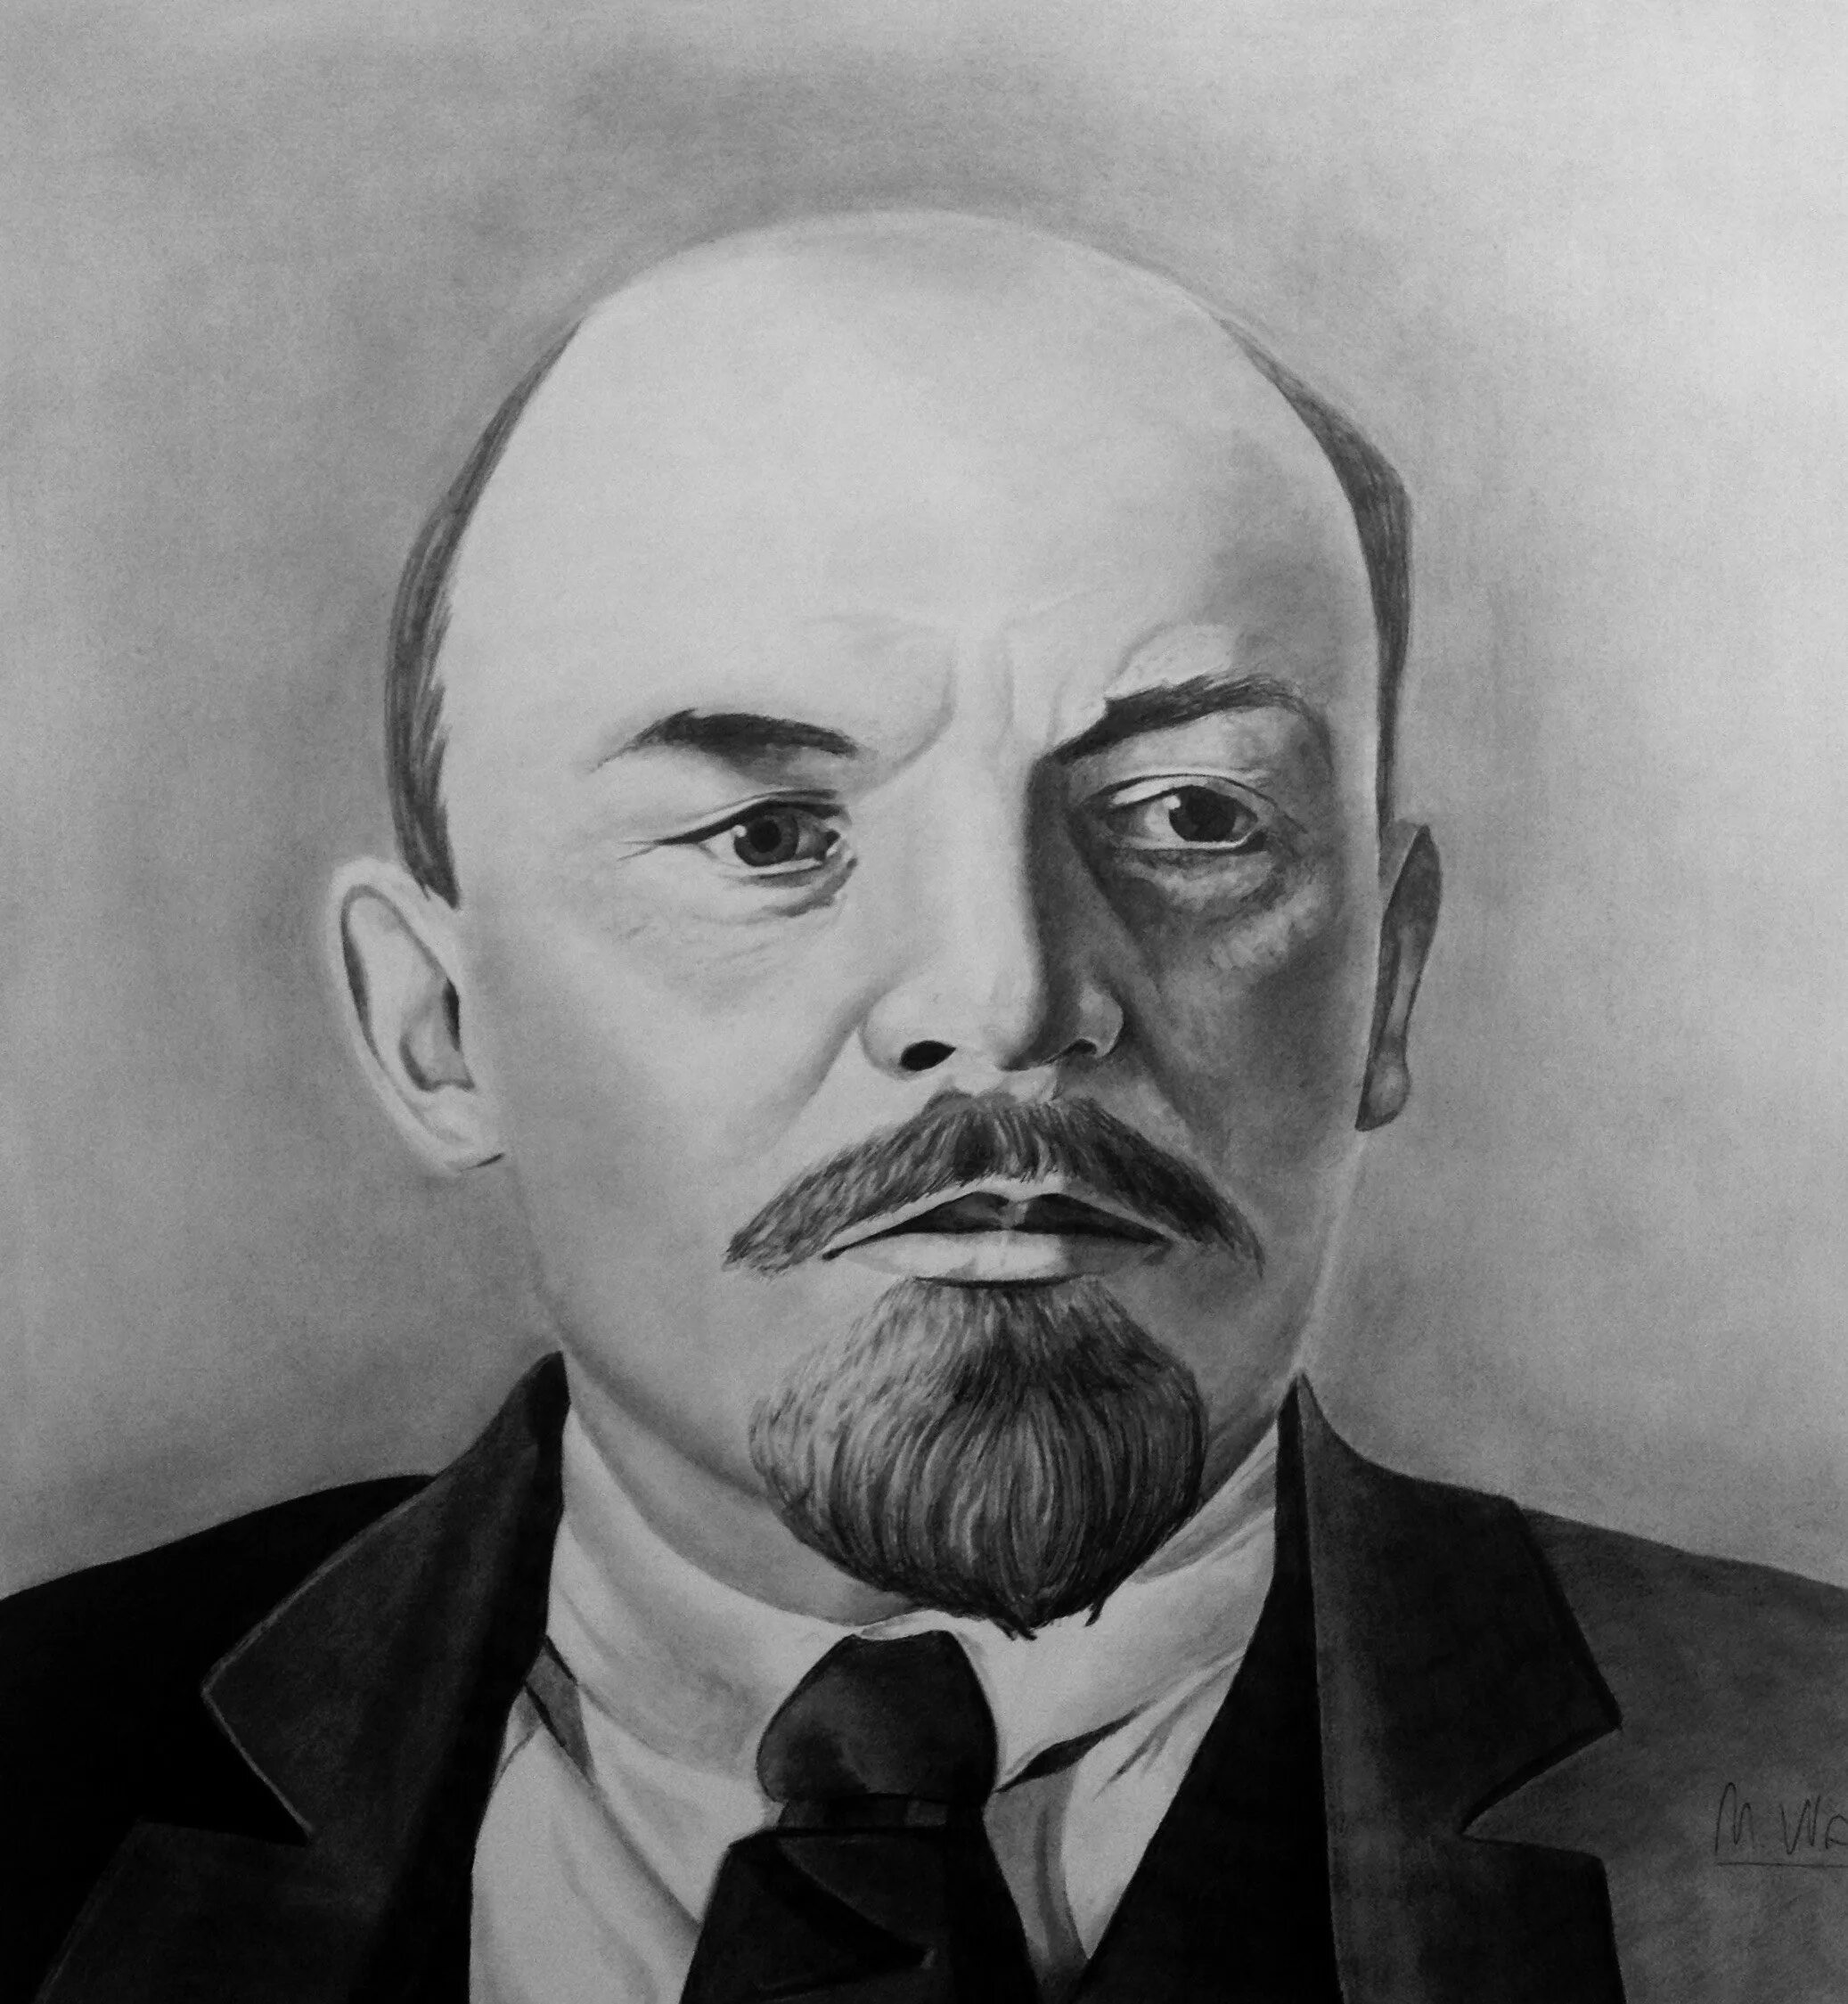 Малявин портрет Ленина.